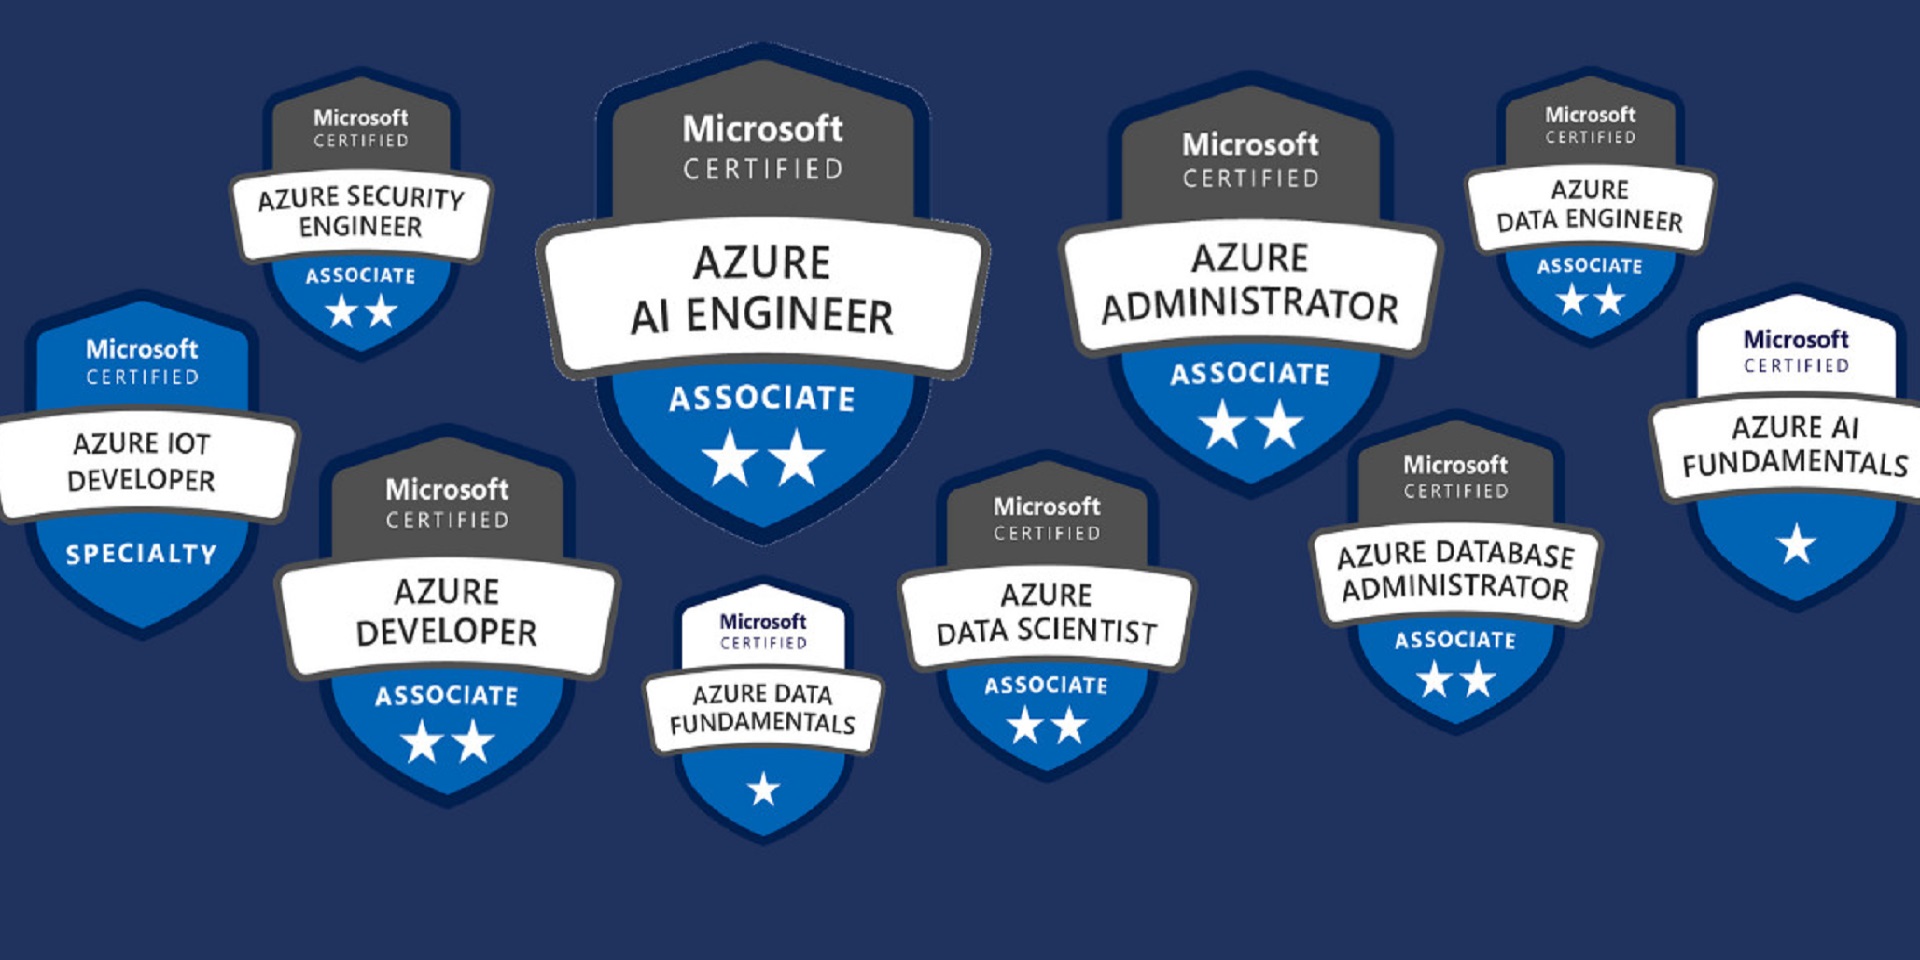 Best selling Microsoft AZURE Certifications